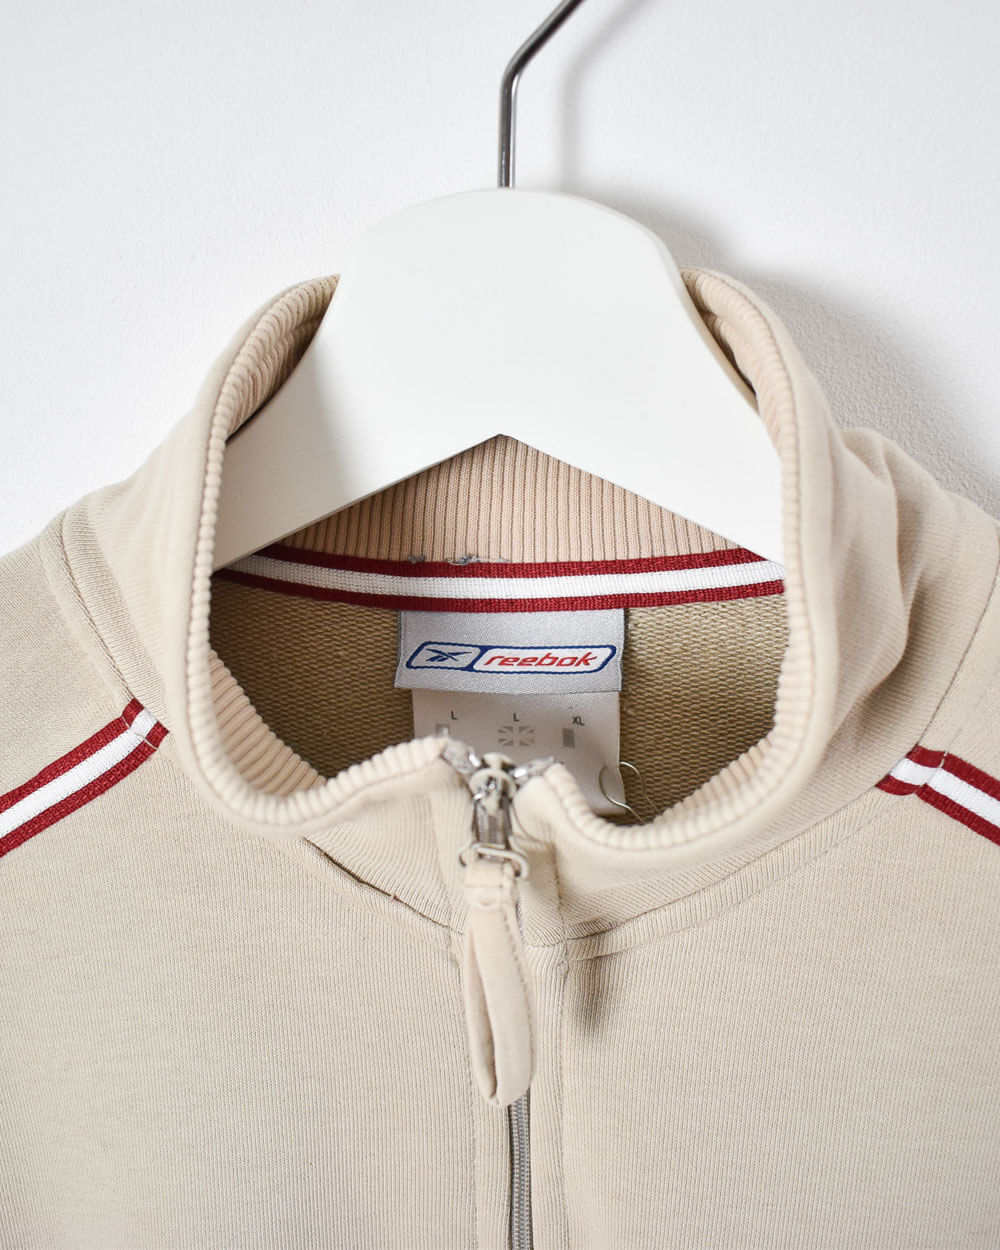 Reebok 1/4 Zip Sweatshirt - X-Large - Domno Vintage 90s, 80s, 00s Retro and Vintage Clothing 